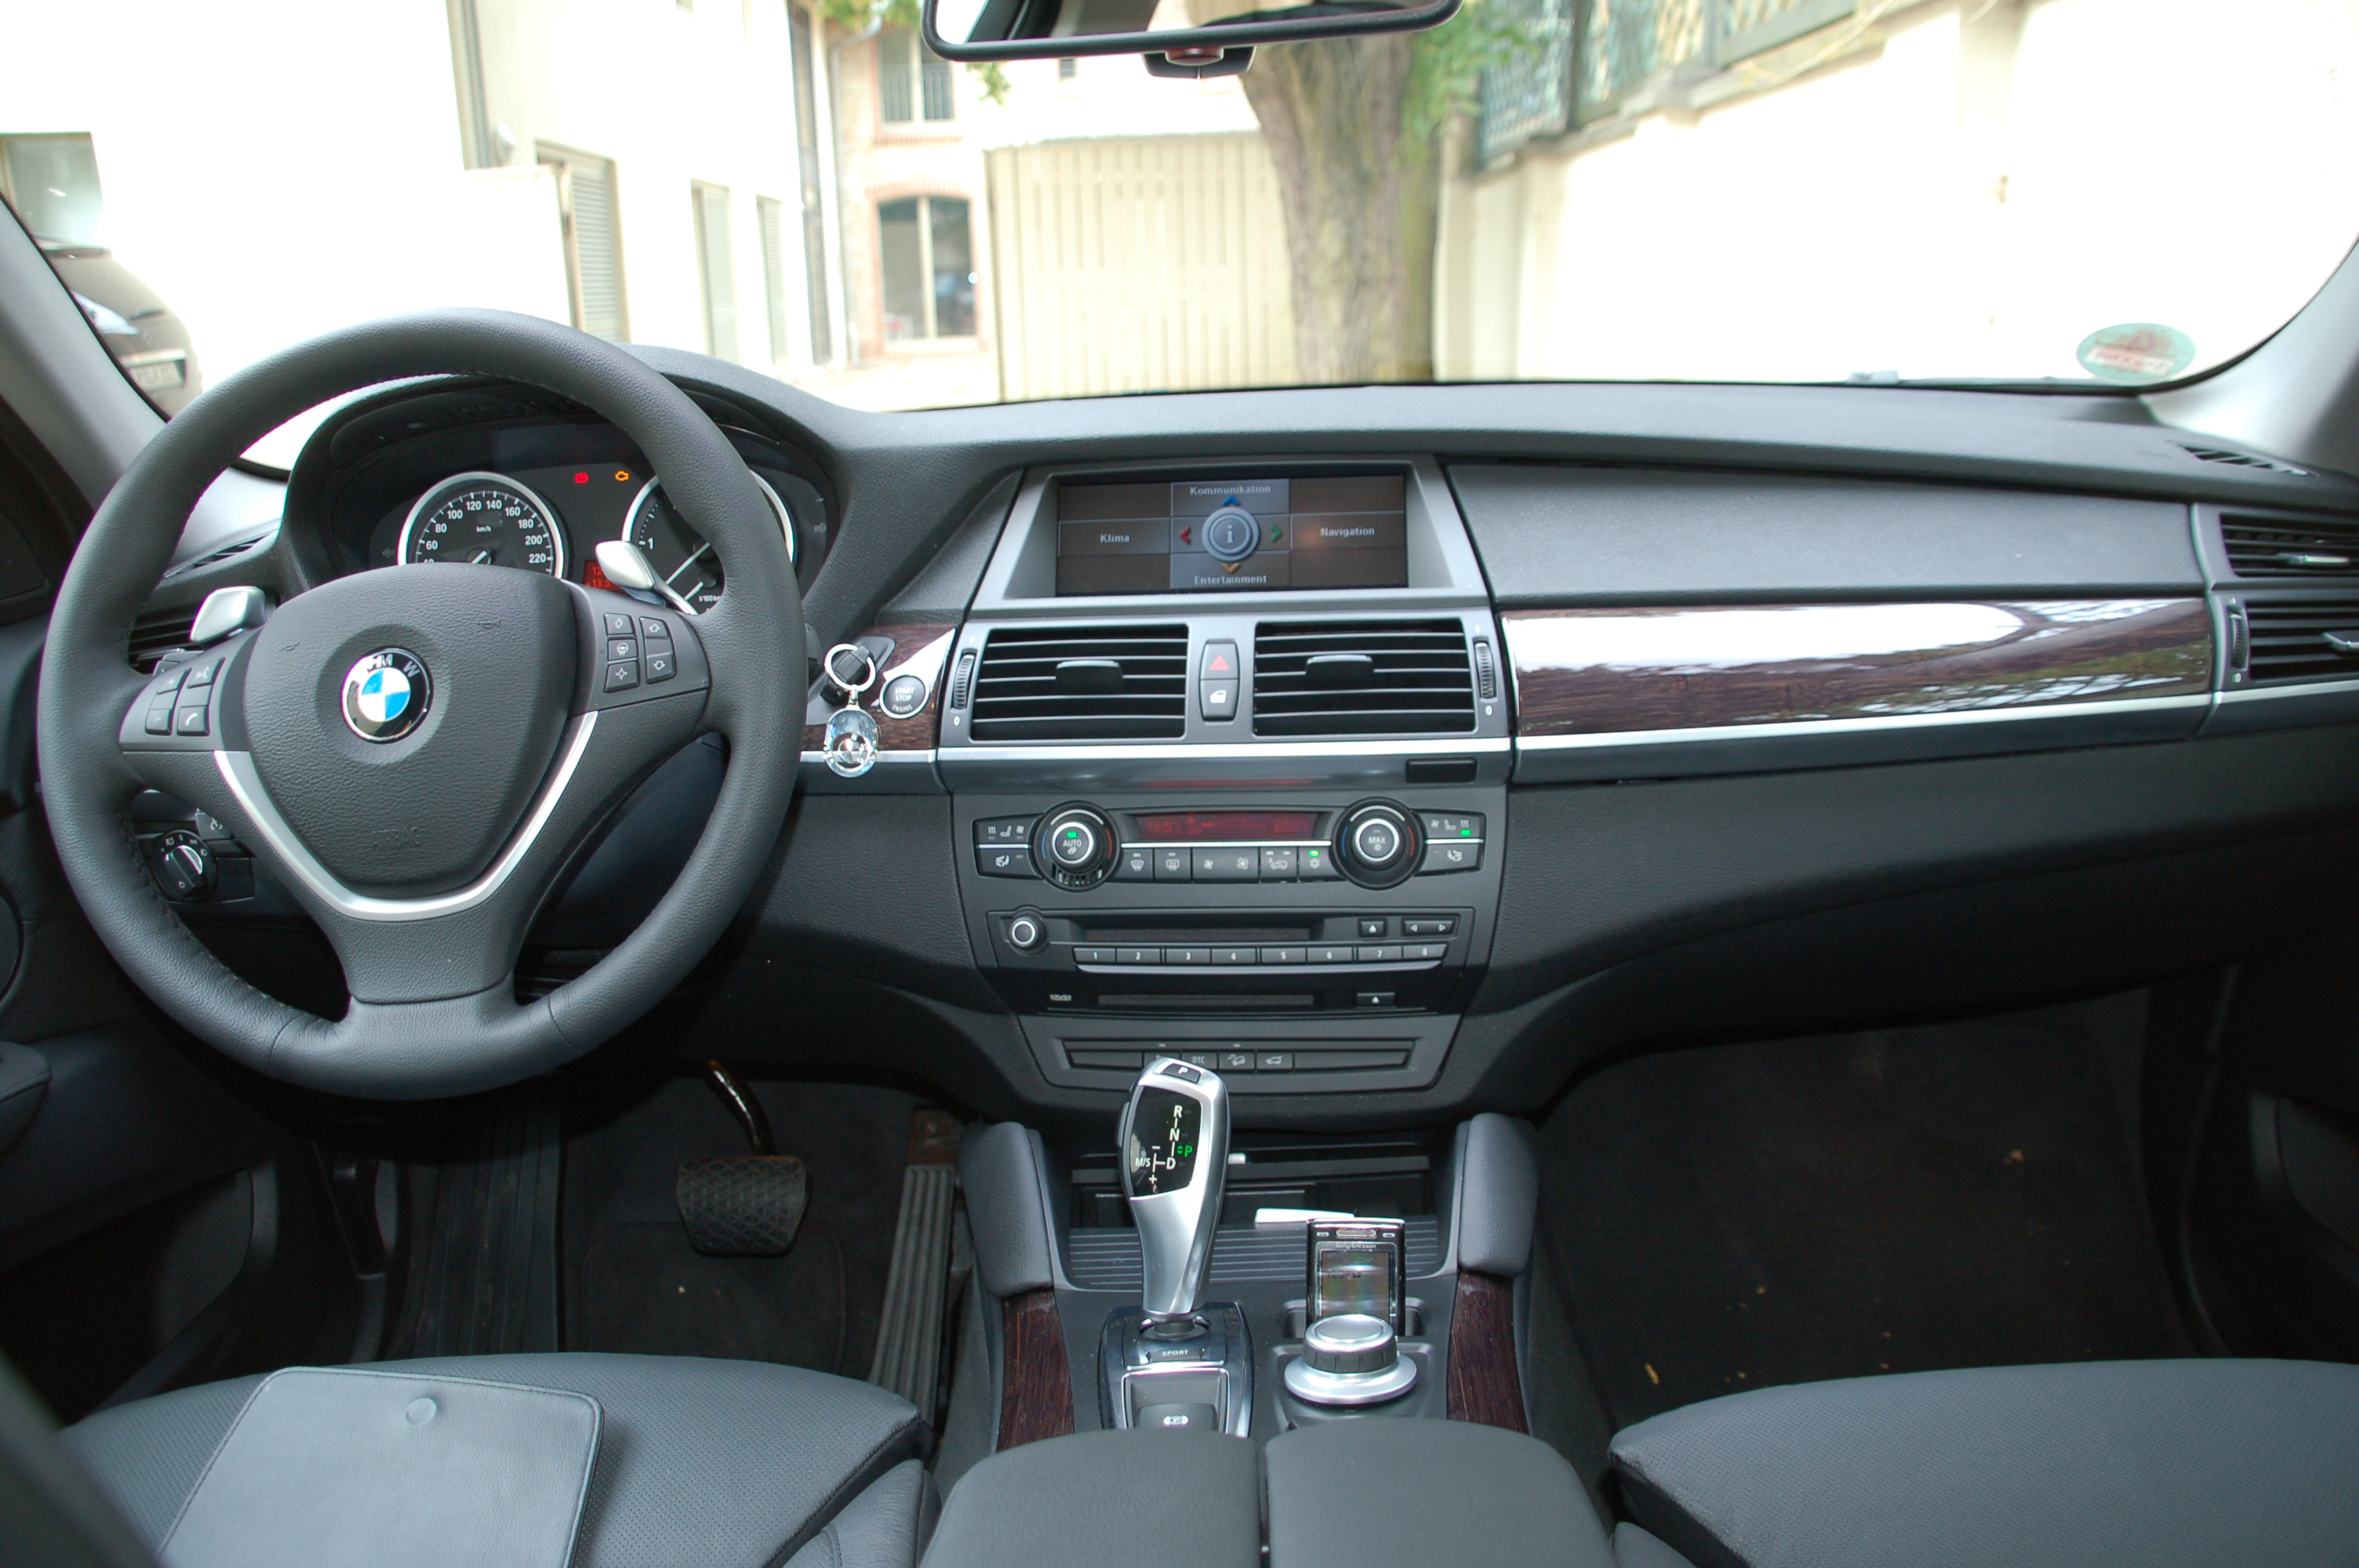 File:BMW X6 xDrive35d Cockpit.jpg